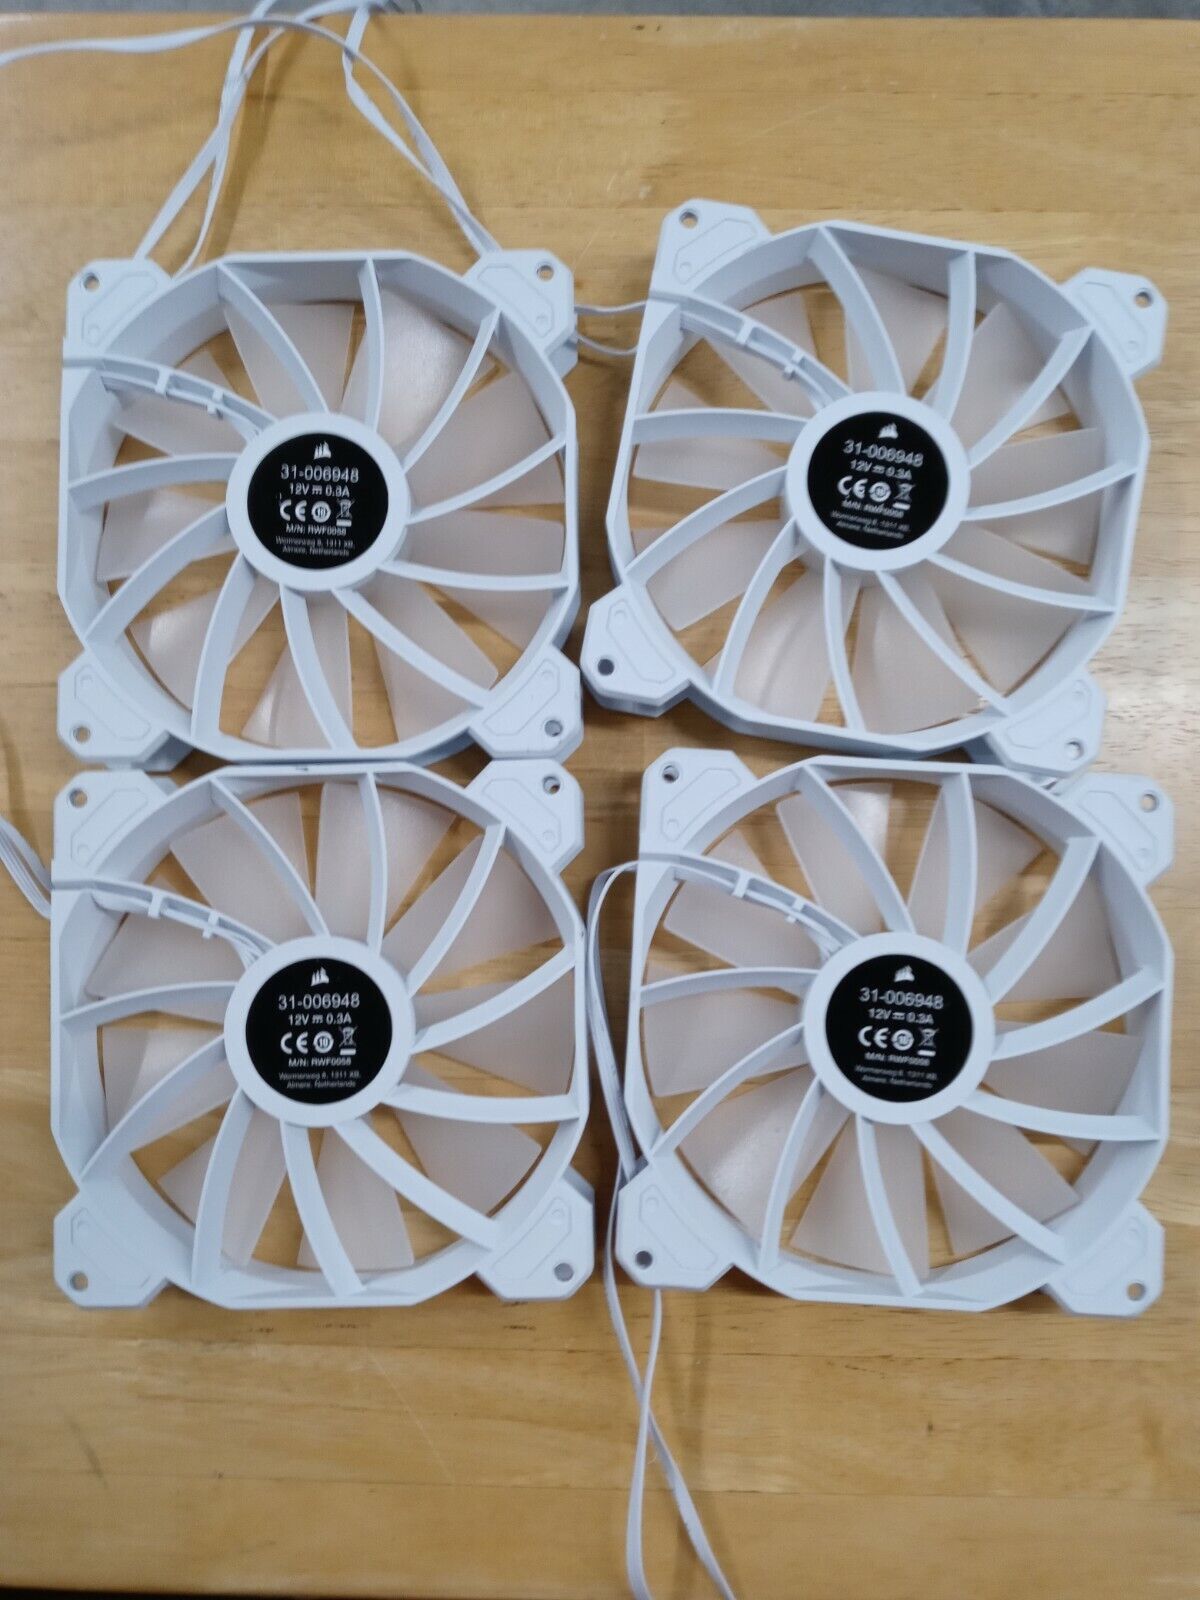 Set of 4 RGB white fans new Corsair 140mm ,12v DC 0.3A . 4pins. 31006948